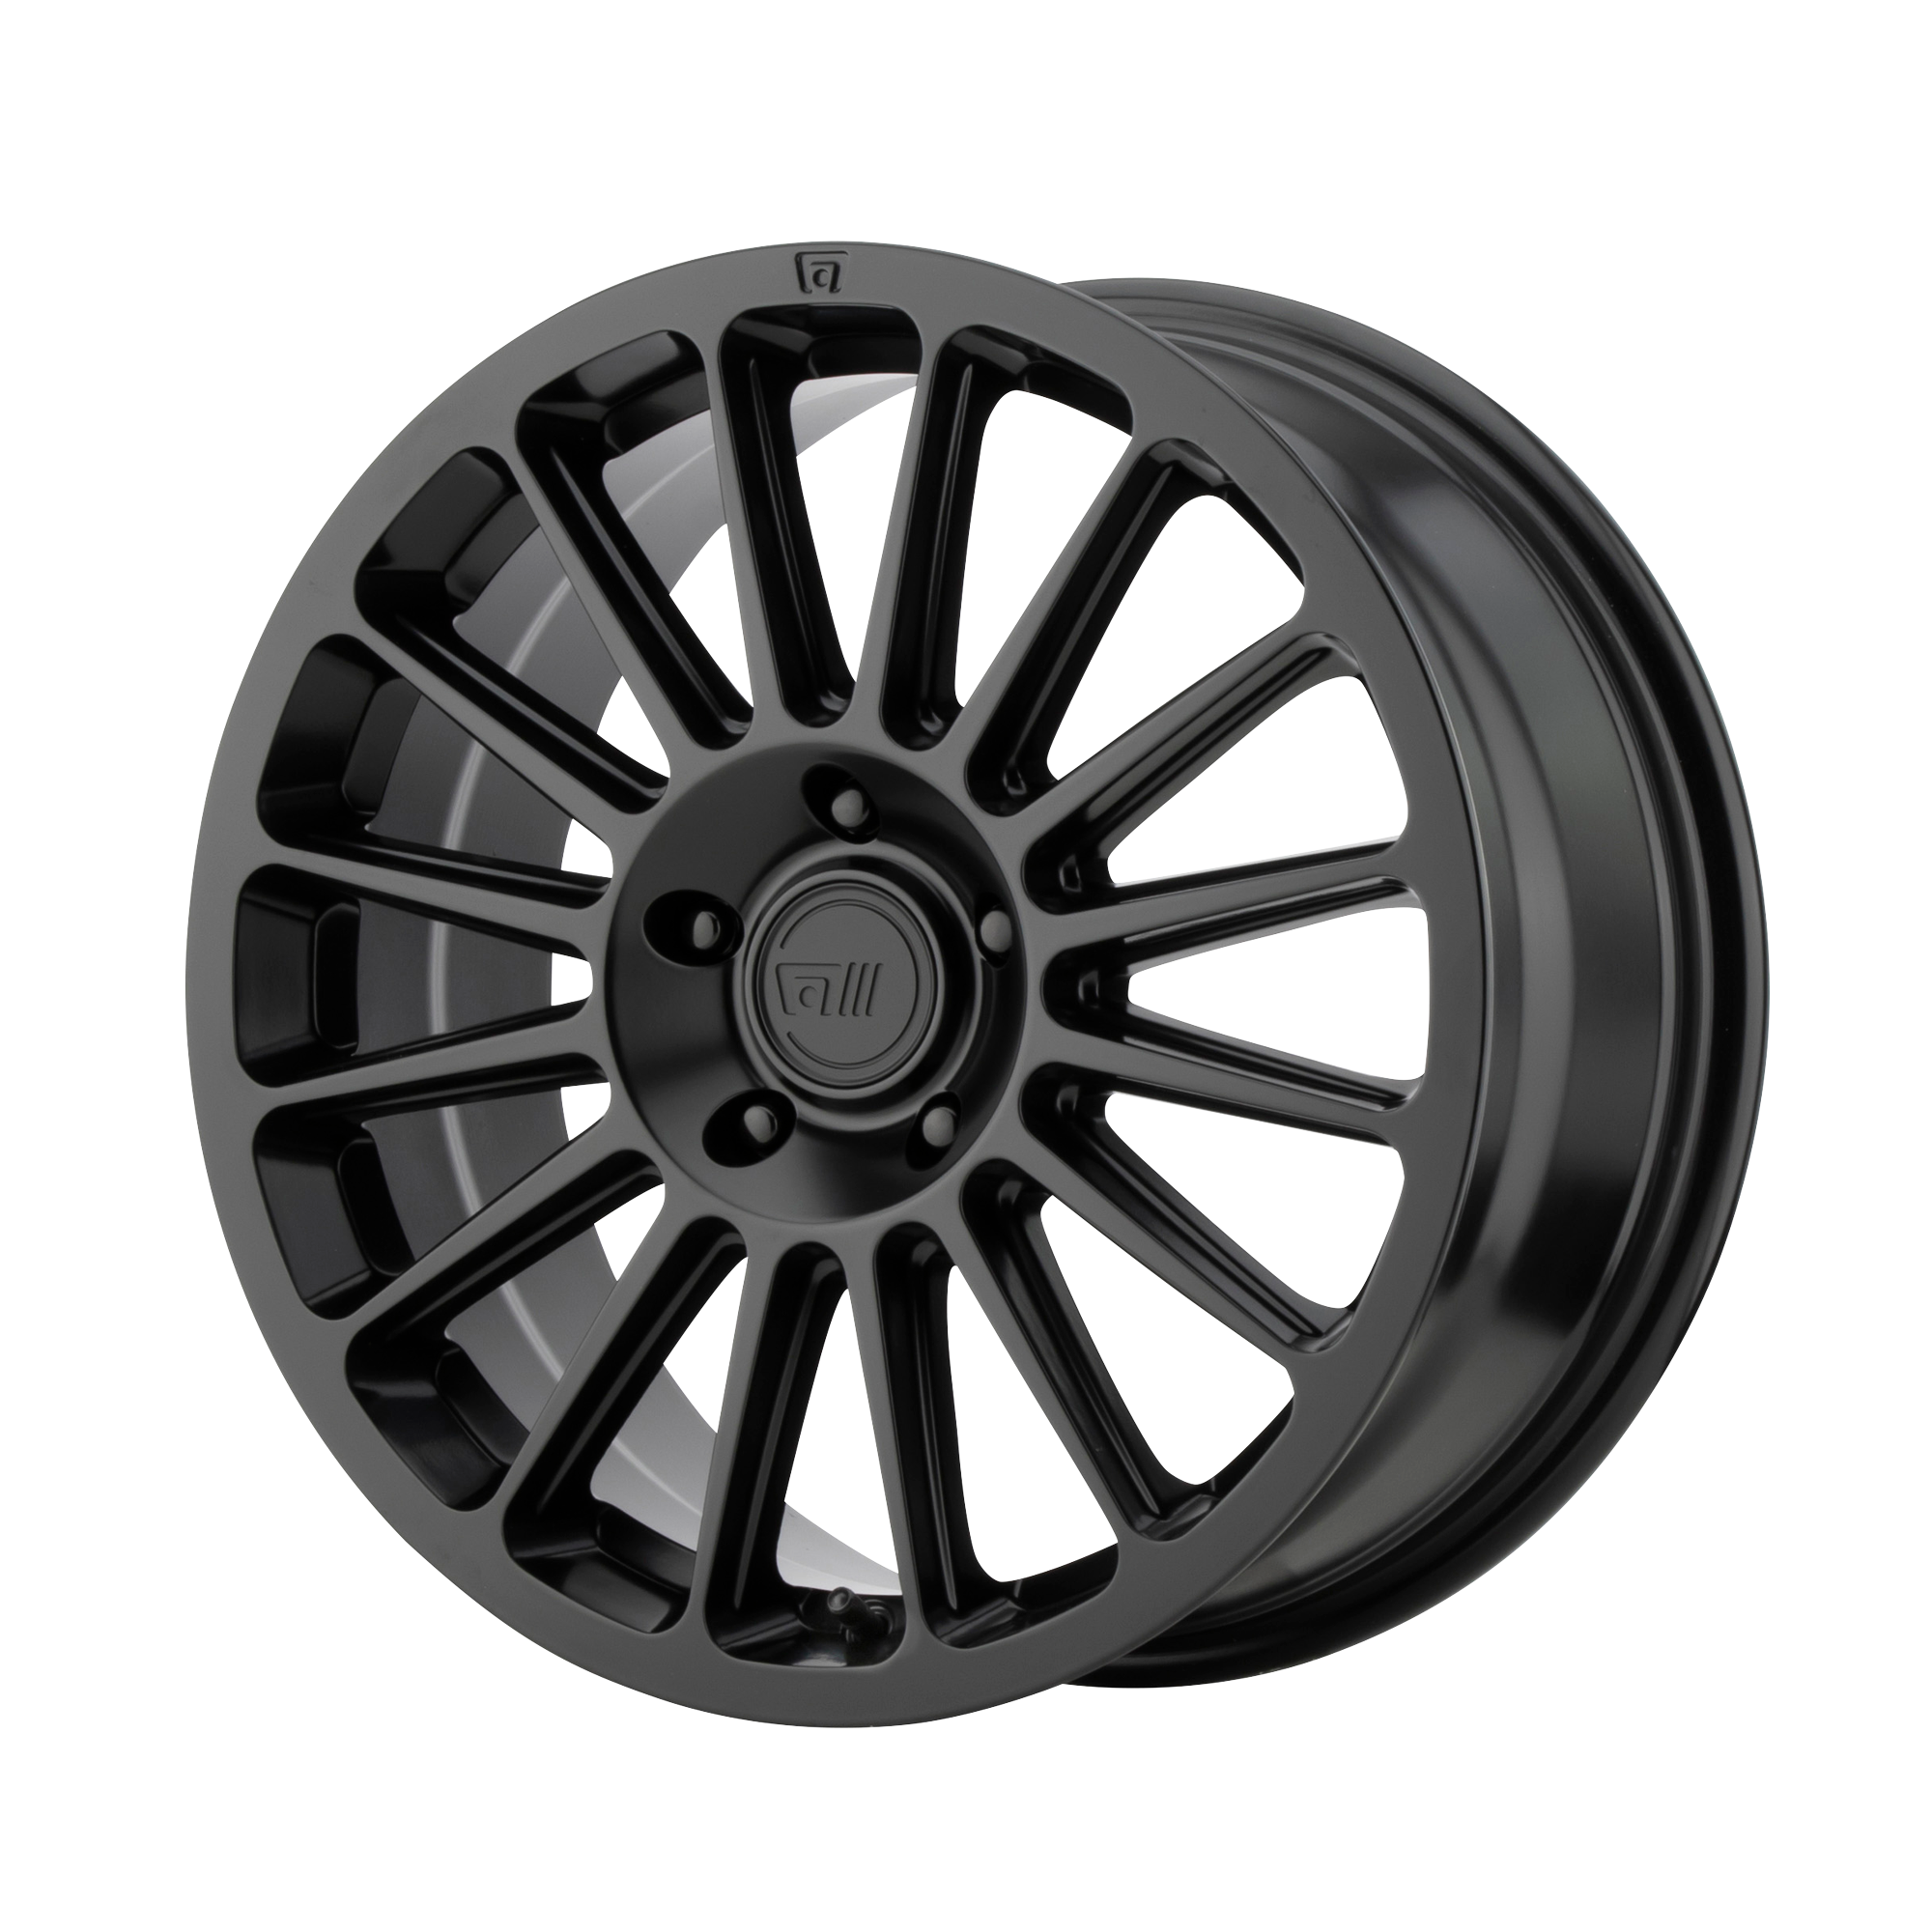 MR141 17x7.5 5x112.00 SATIN BLACK (40 mm) - Tires and Engine Performance